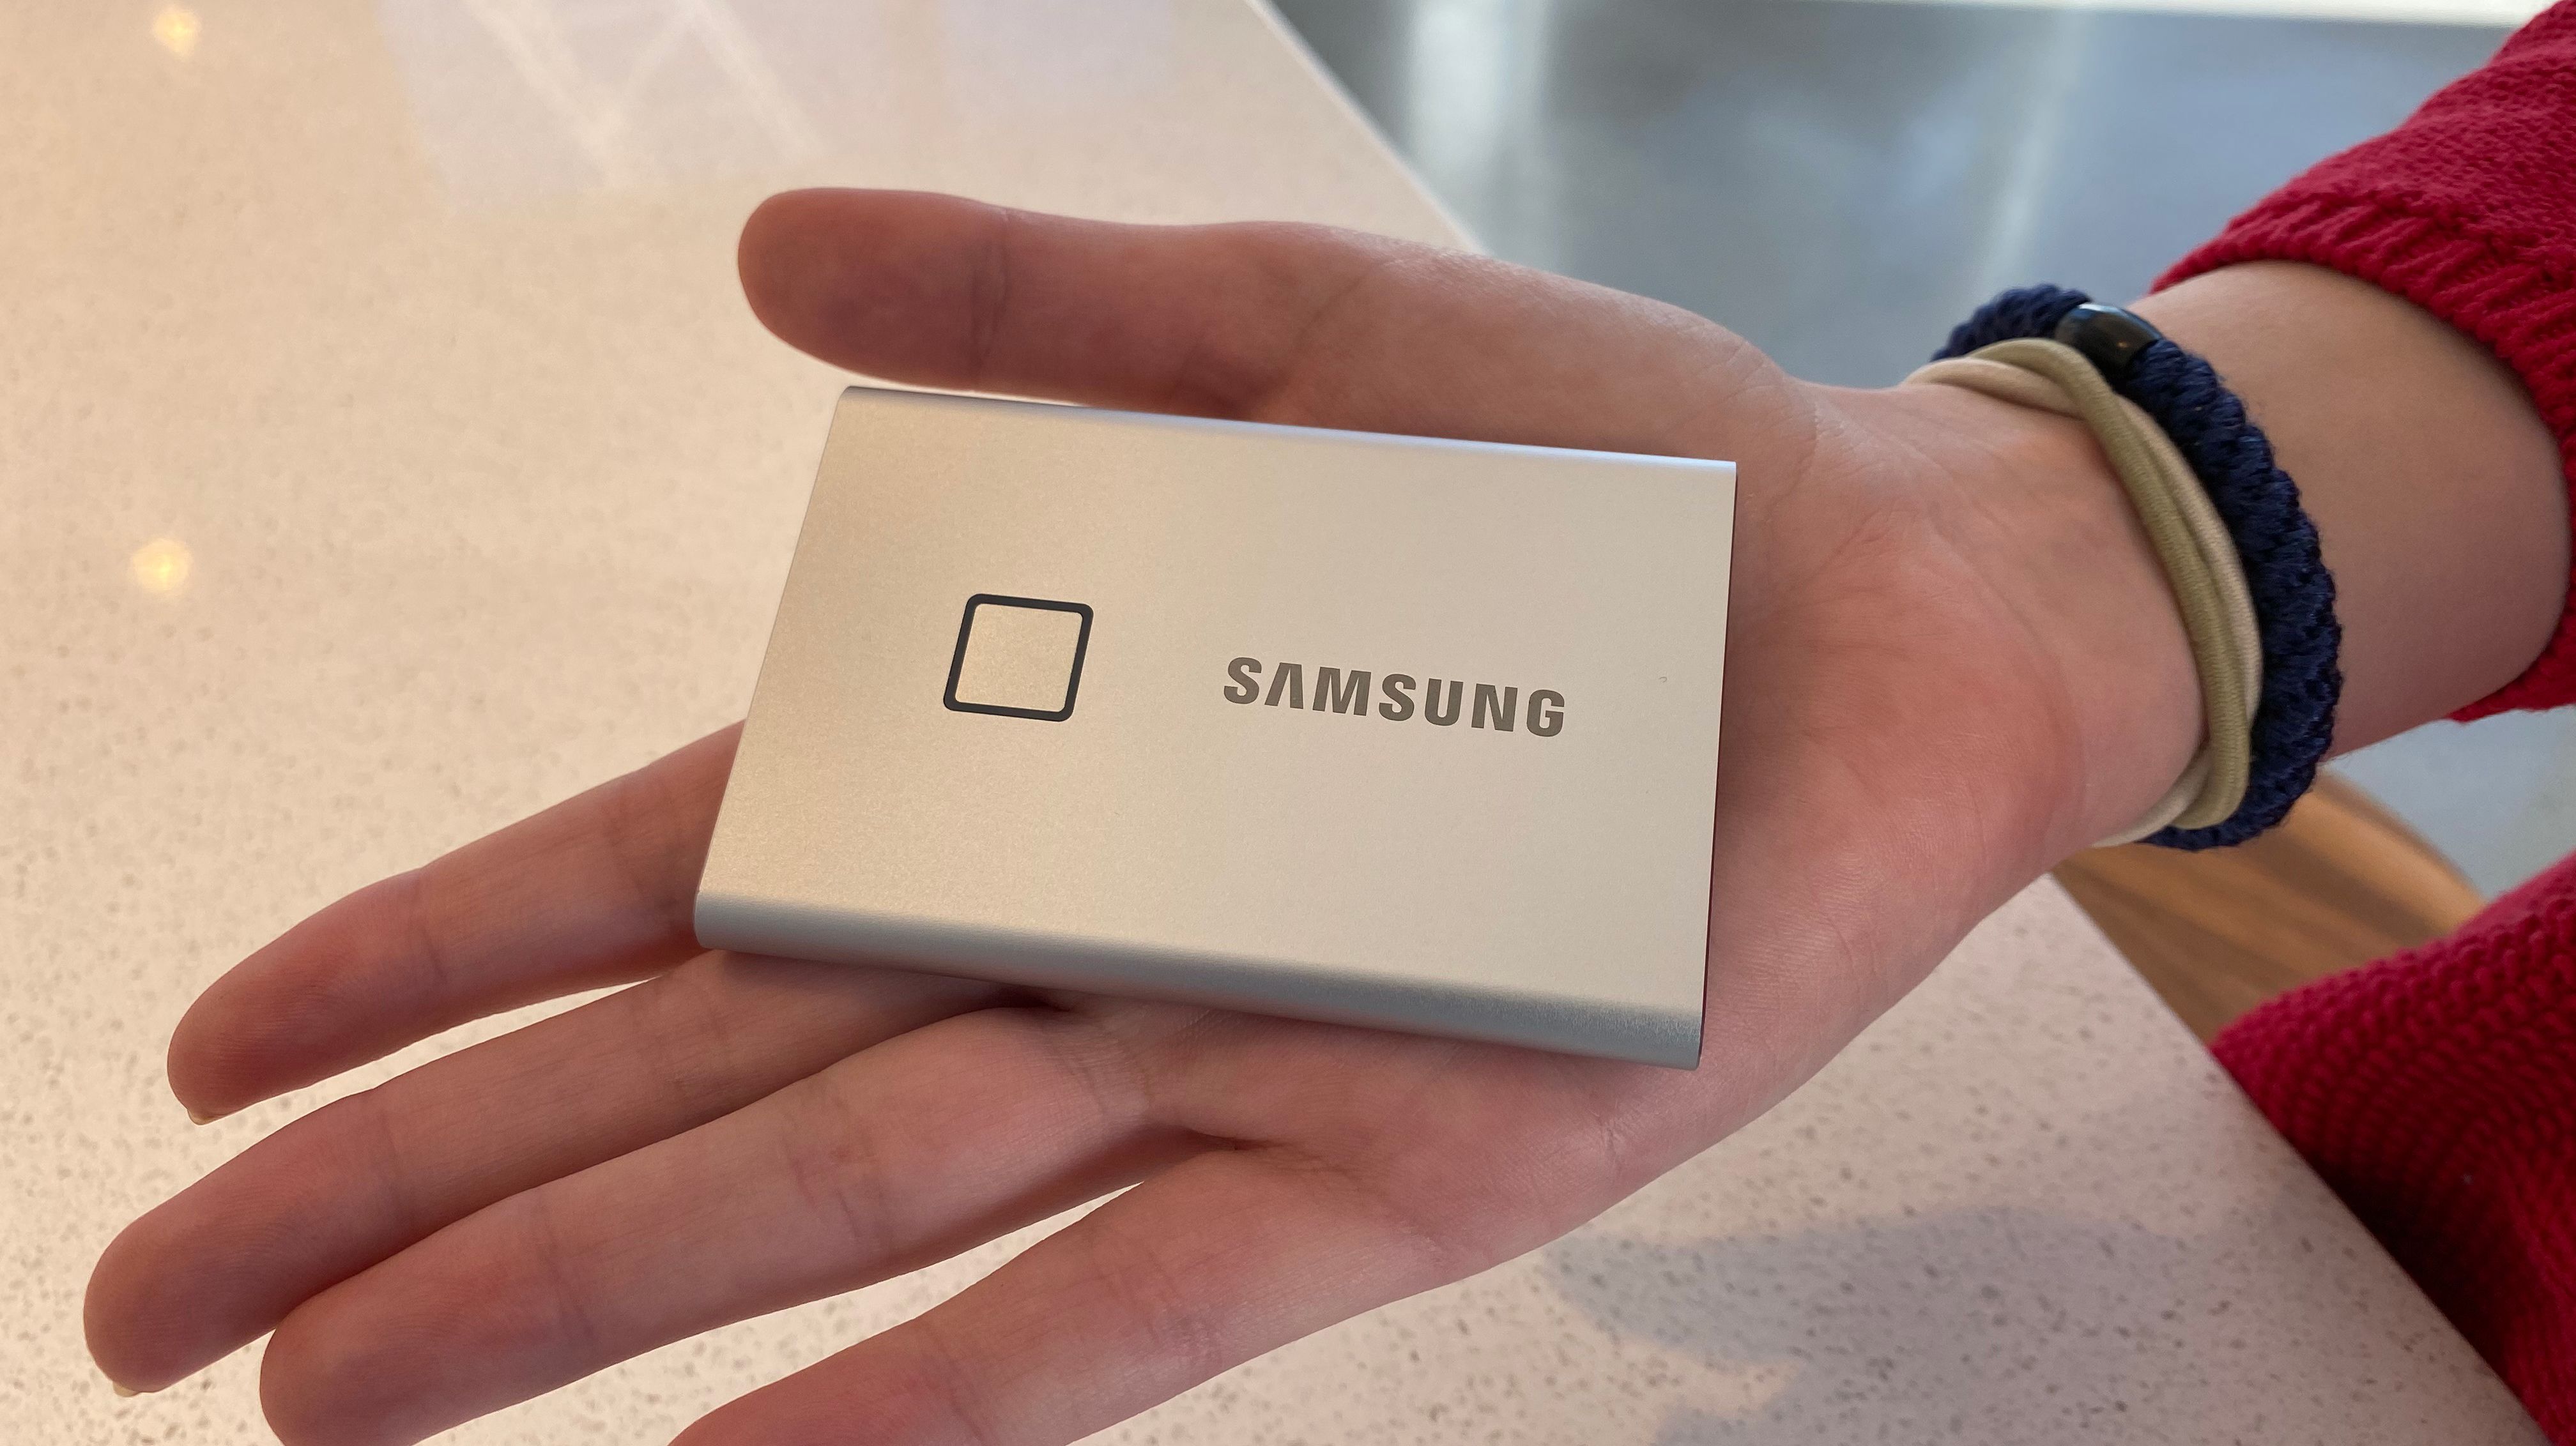 Samsung T7 Touch Portable SSD CNN Underscored